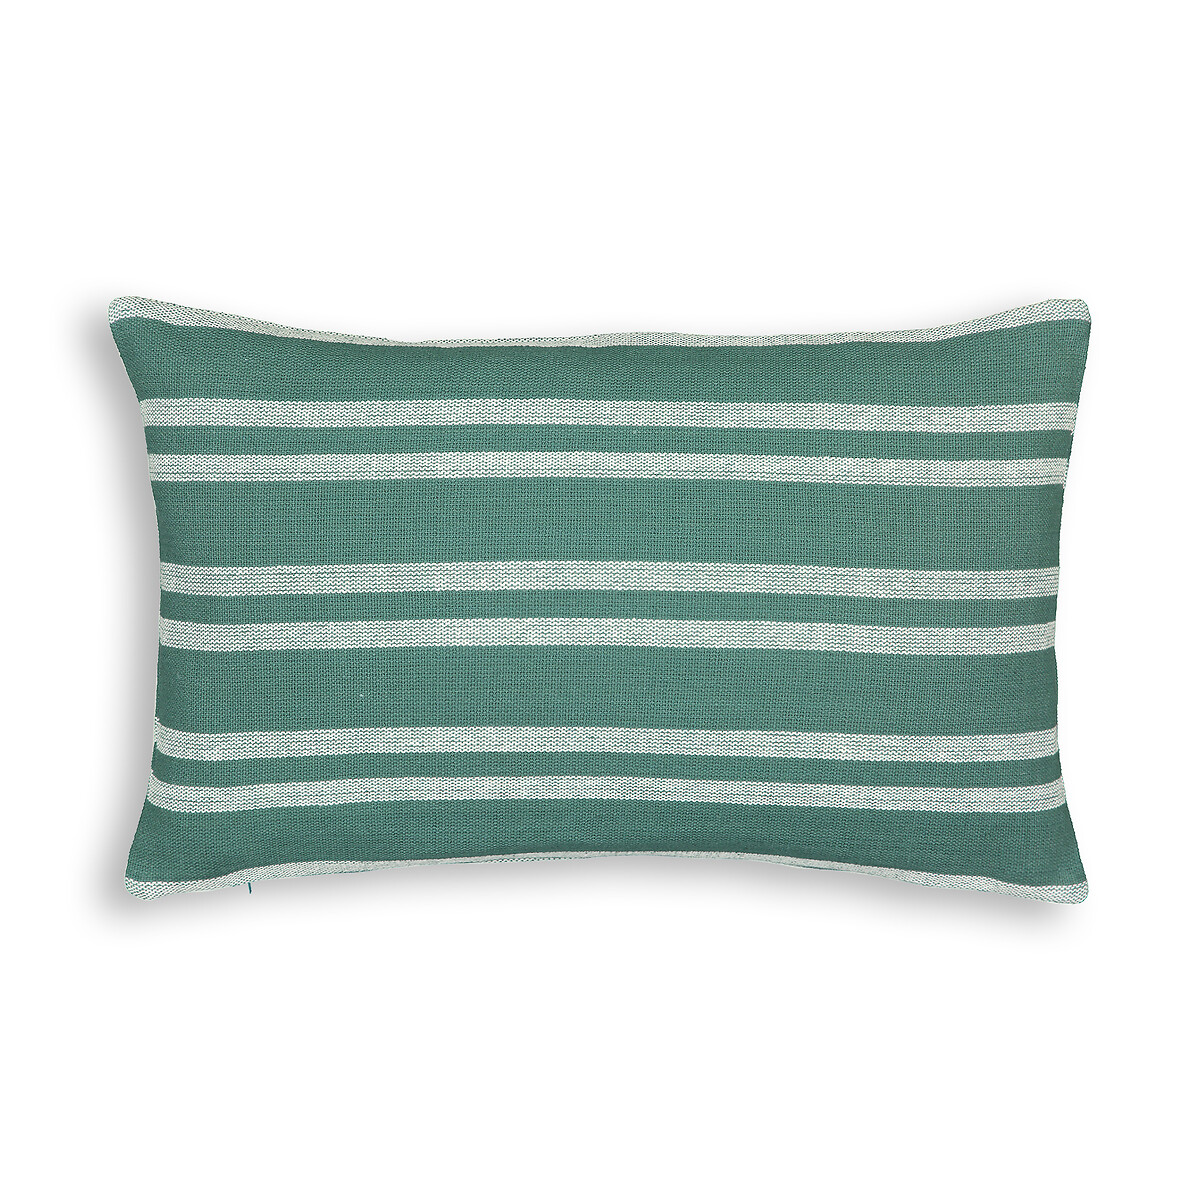 Чехол LaRedoute На подушку в полоску из 100 хлопка Minille 50 x 30 см зеленый, размер 50 x 30 см - фото 1